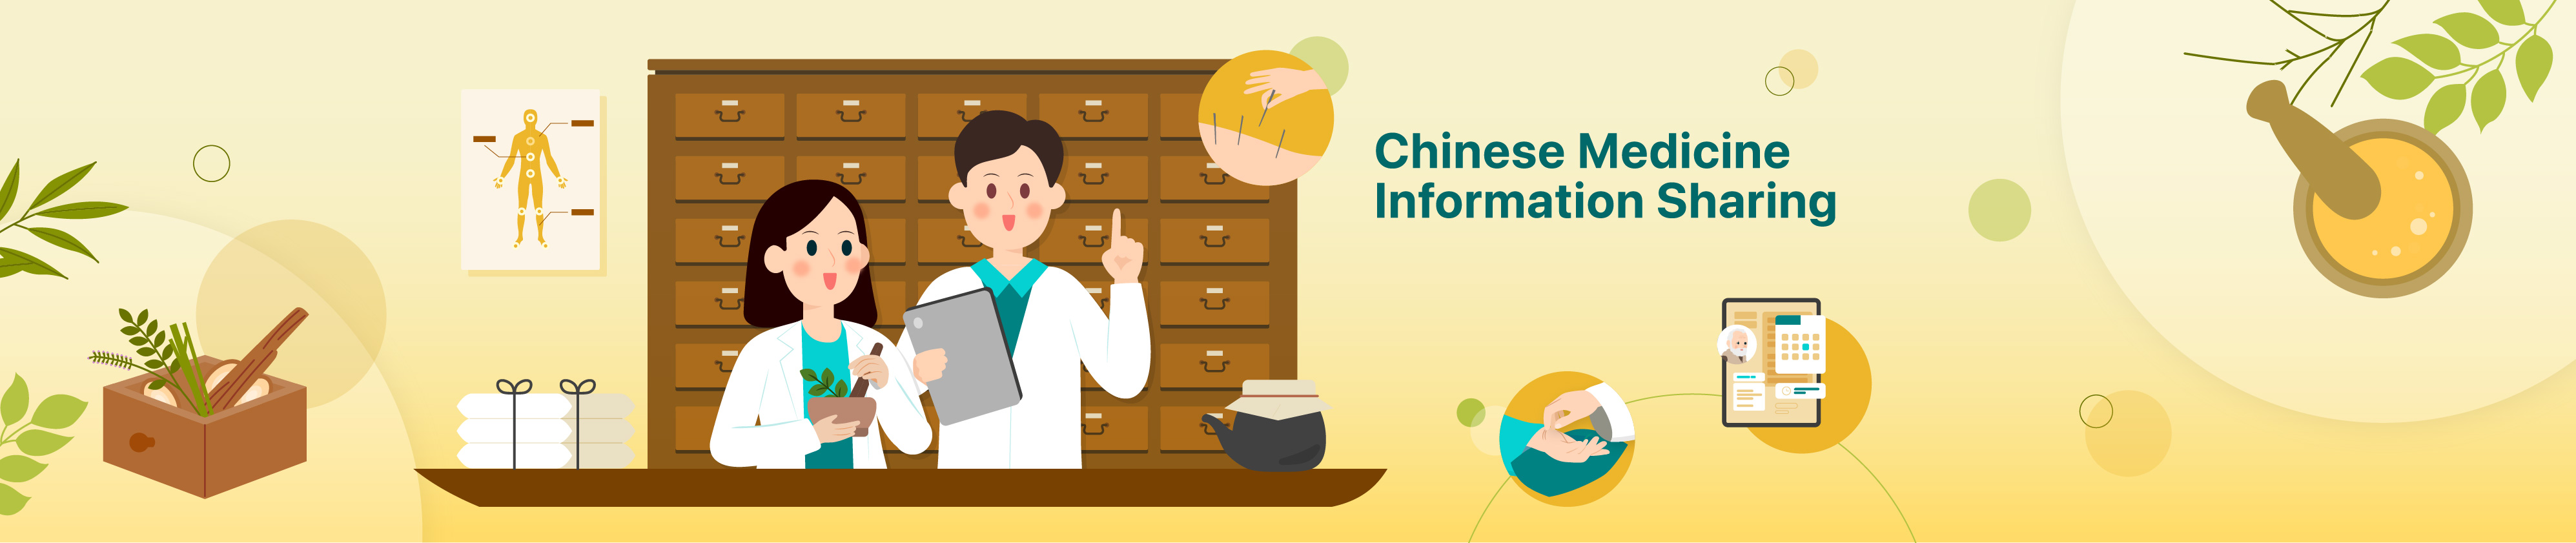 Chinese Medicine Information Sharing